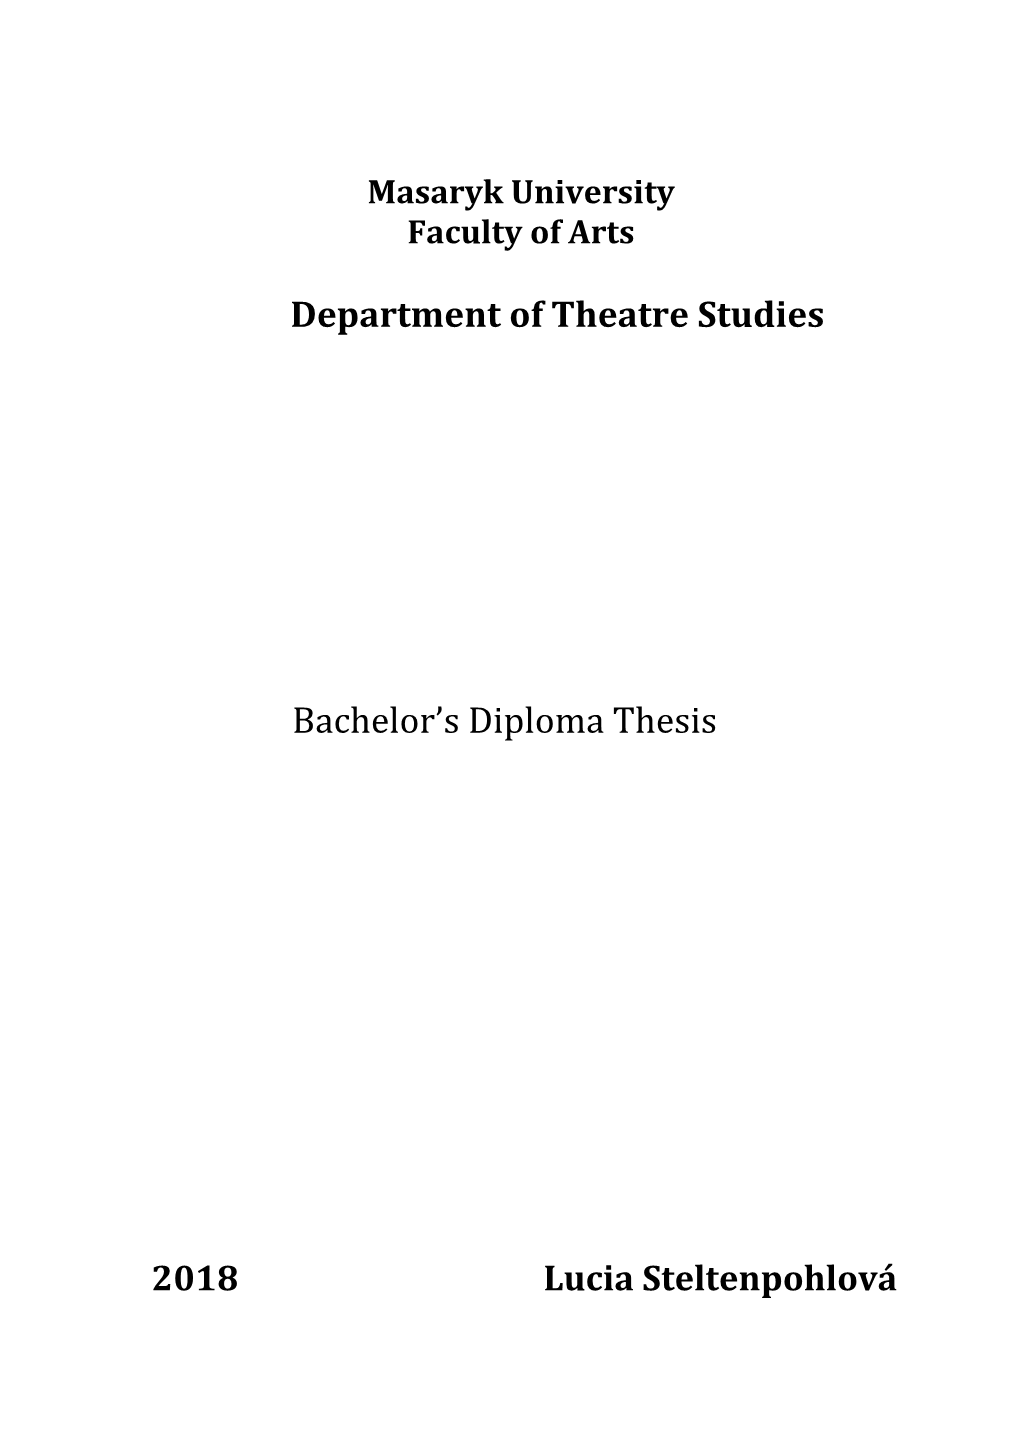 Theatricality of Naumachiae Bachelor’S Diploma Thesis